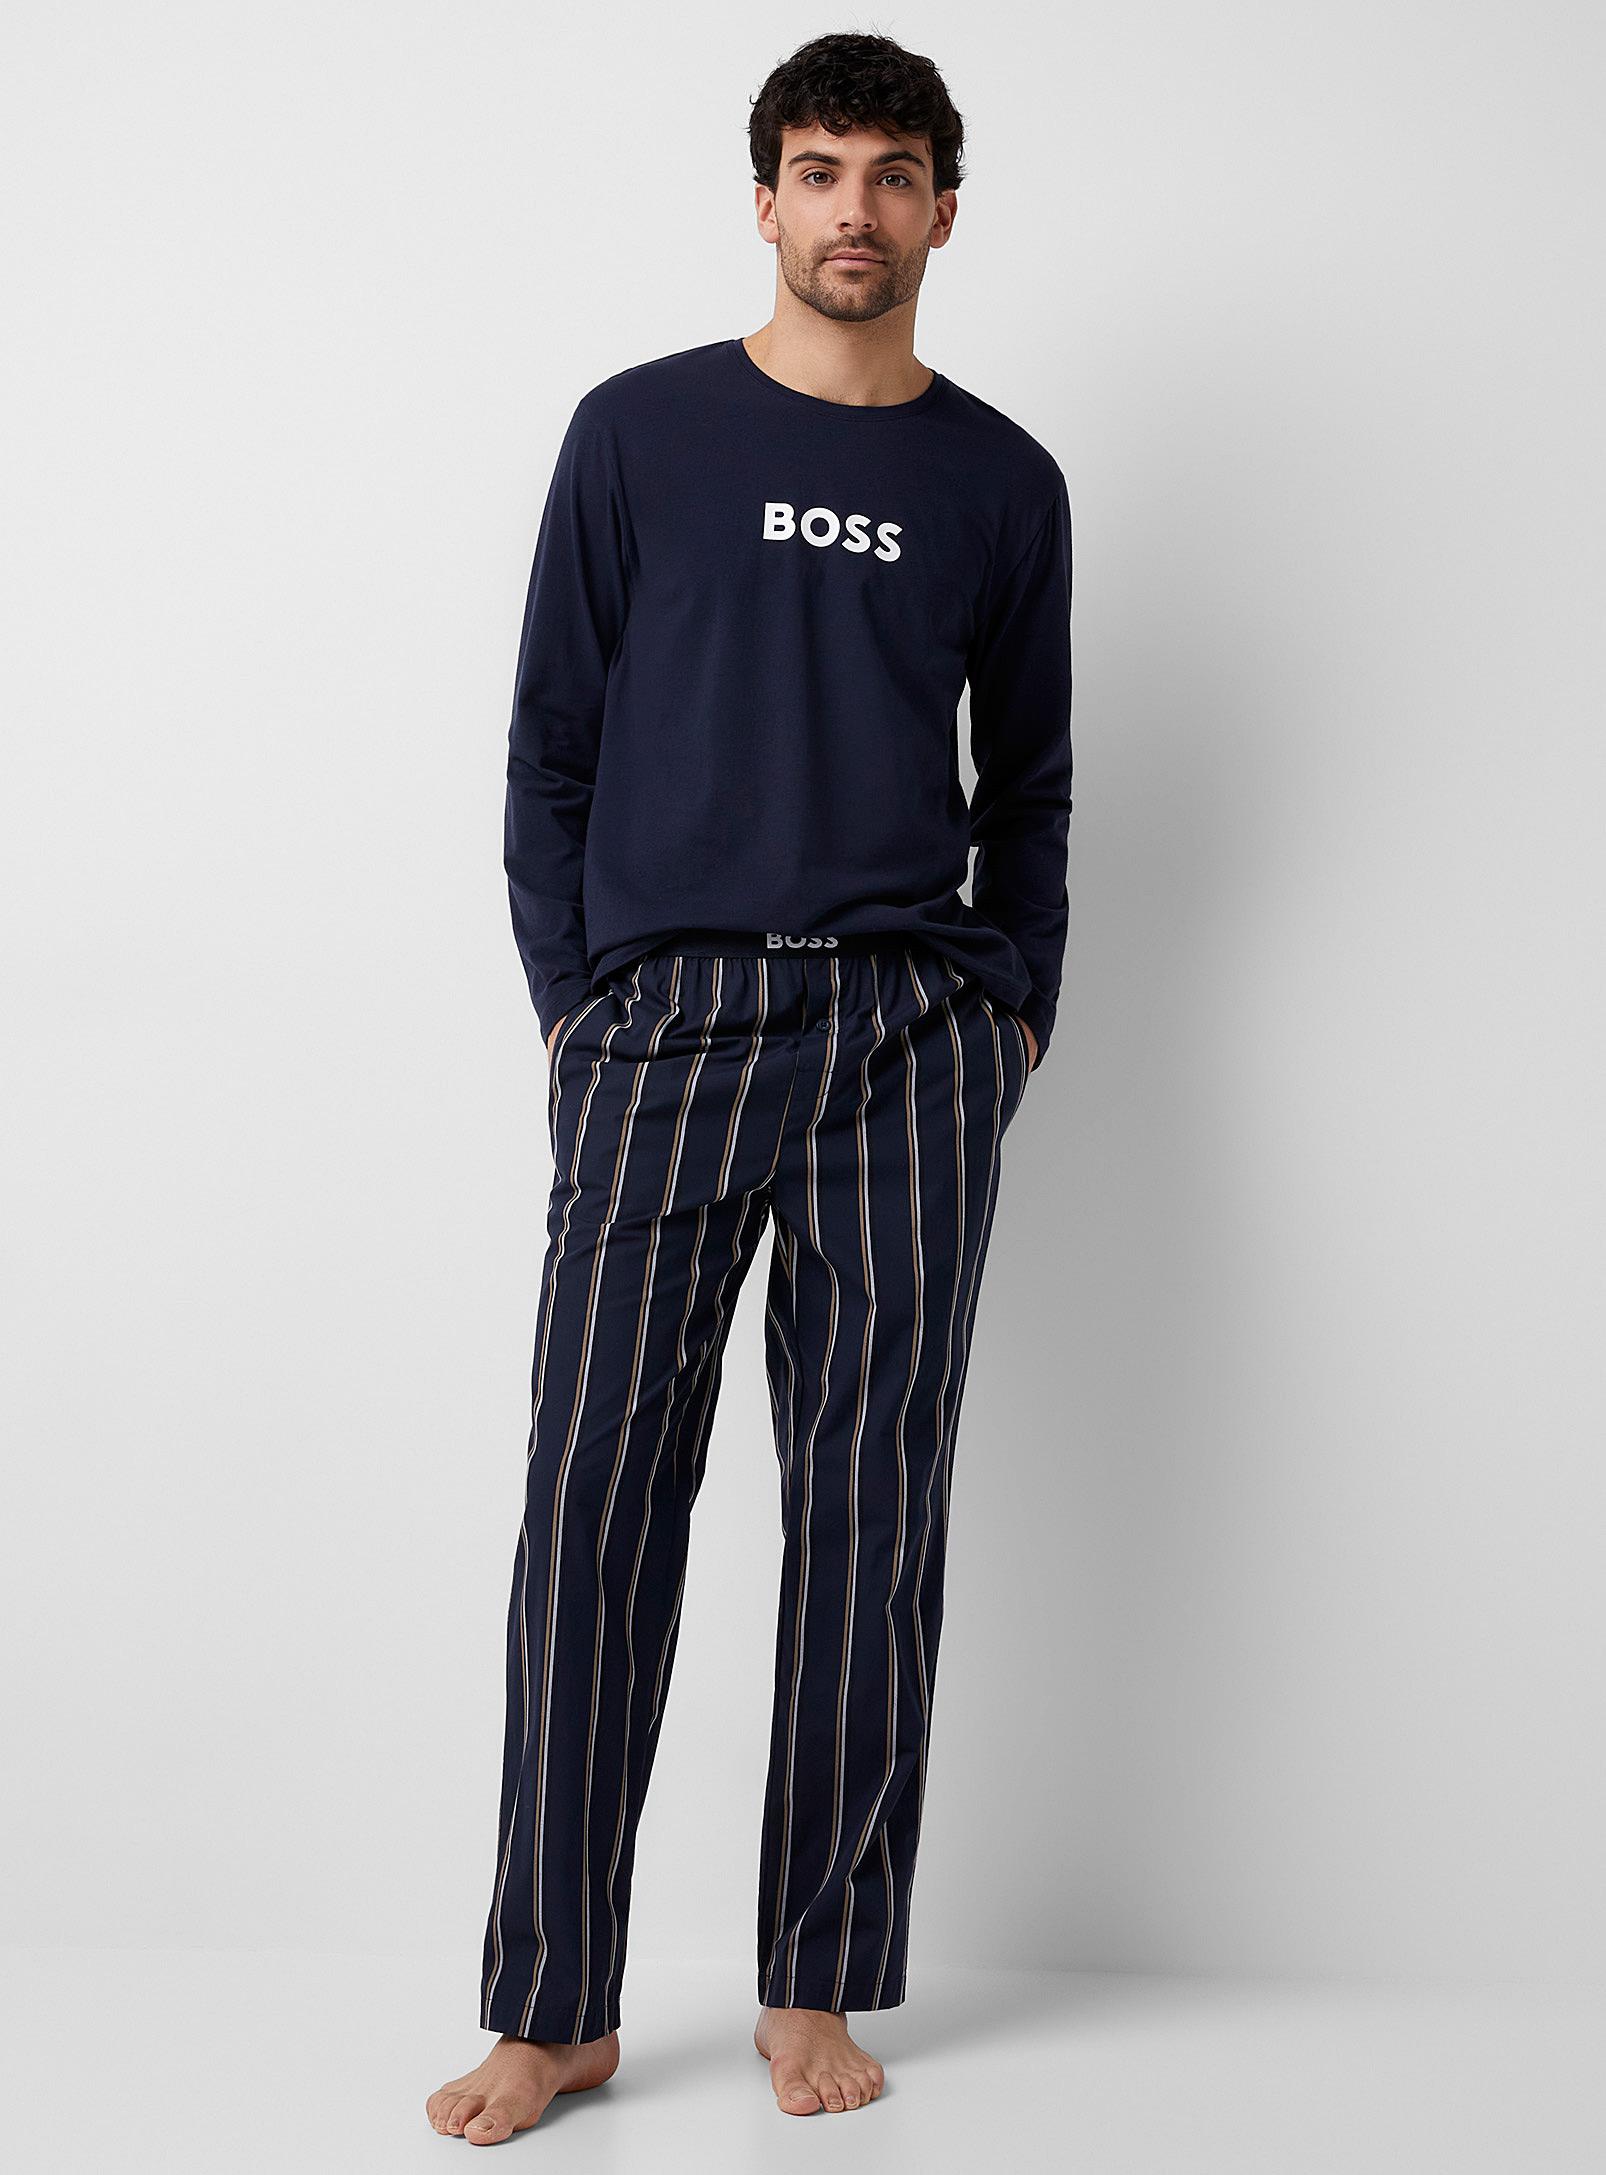 BOSS by HUGO BOSS Dark Stripe Pyjama Set in Black for Men | Lyst